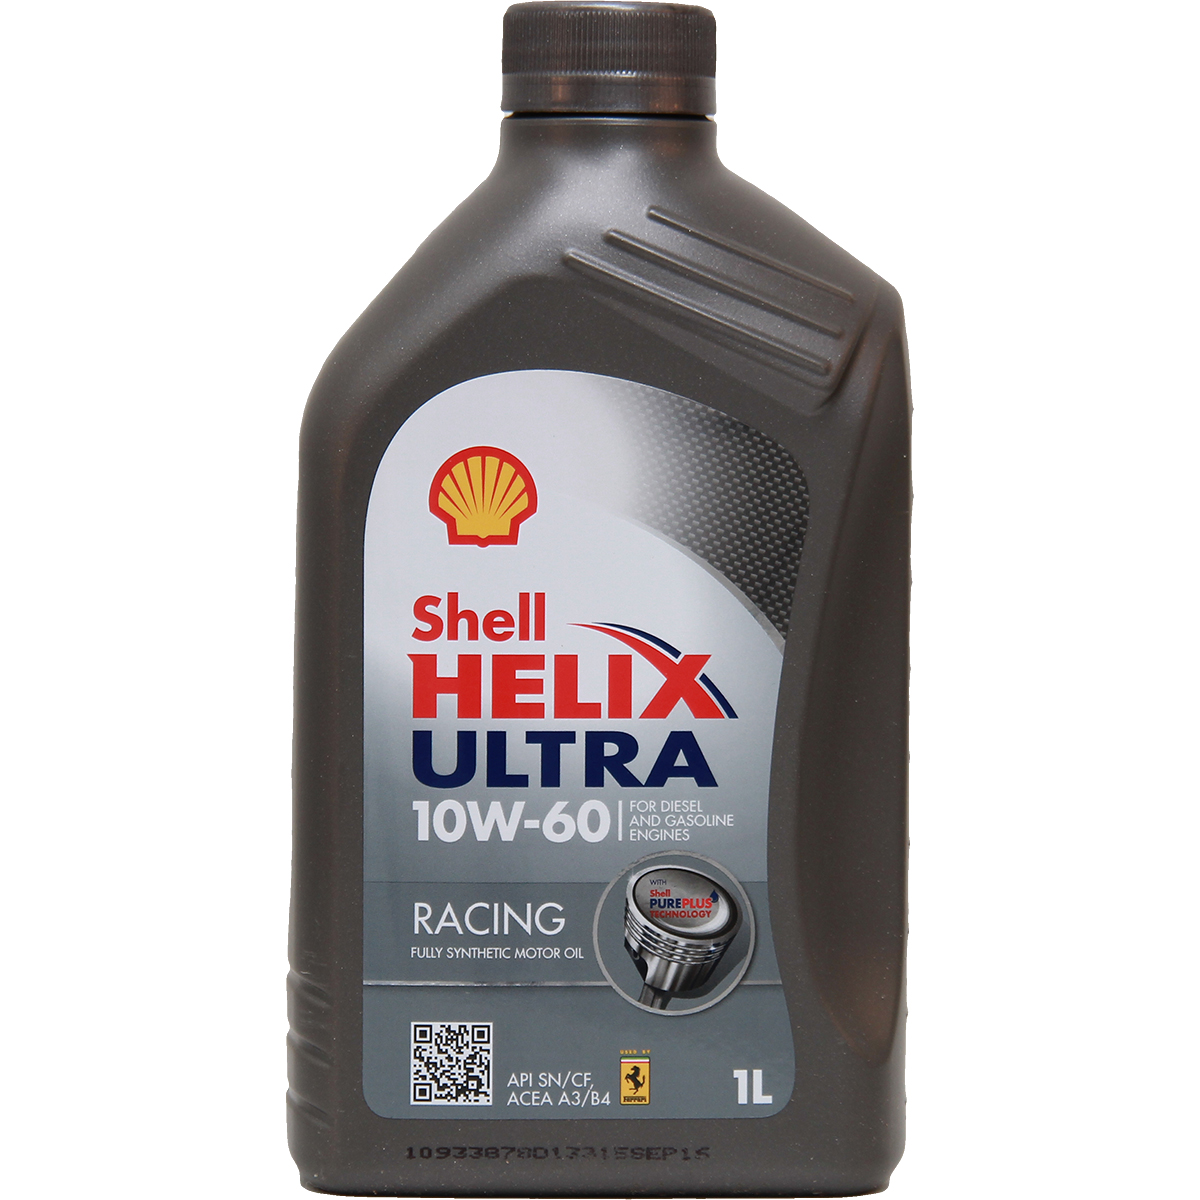 Shell Helix Ultra Racing 10W-60 1 Liter